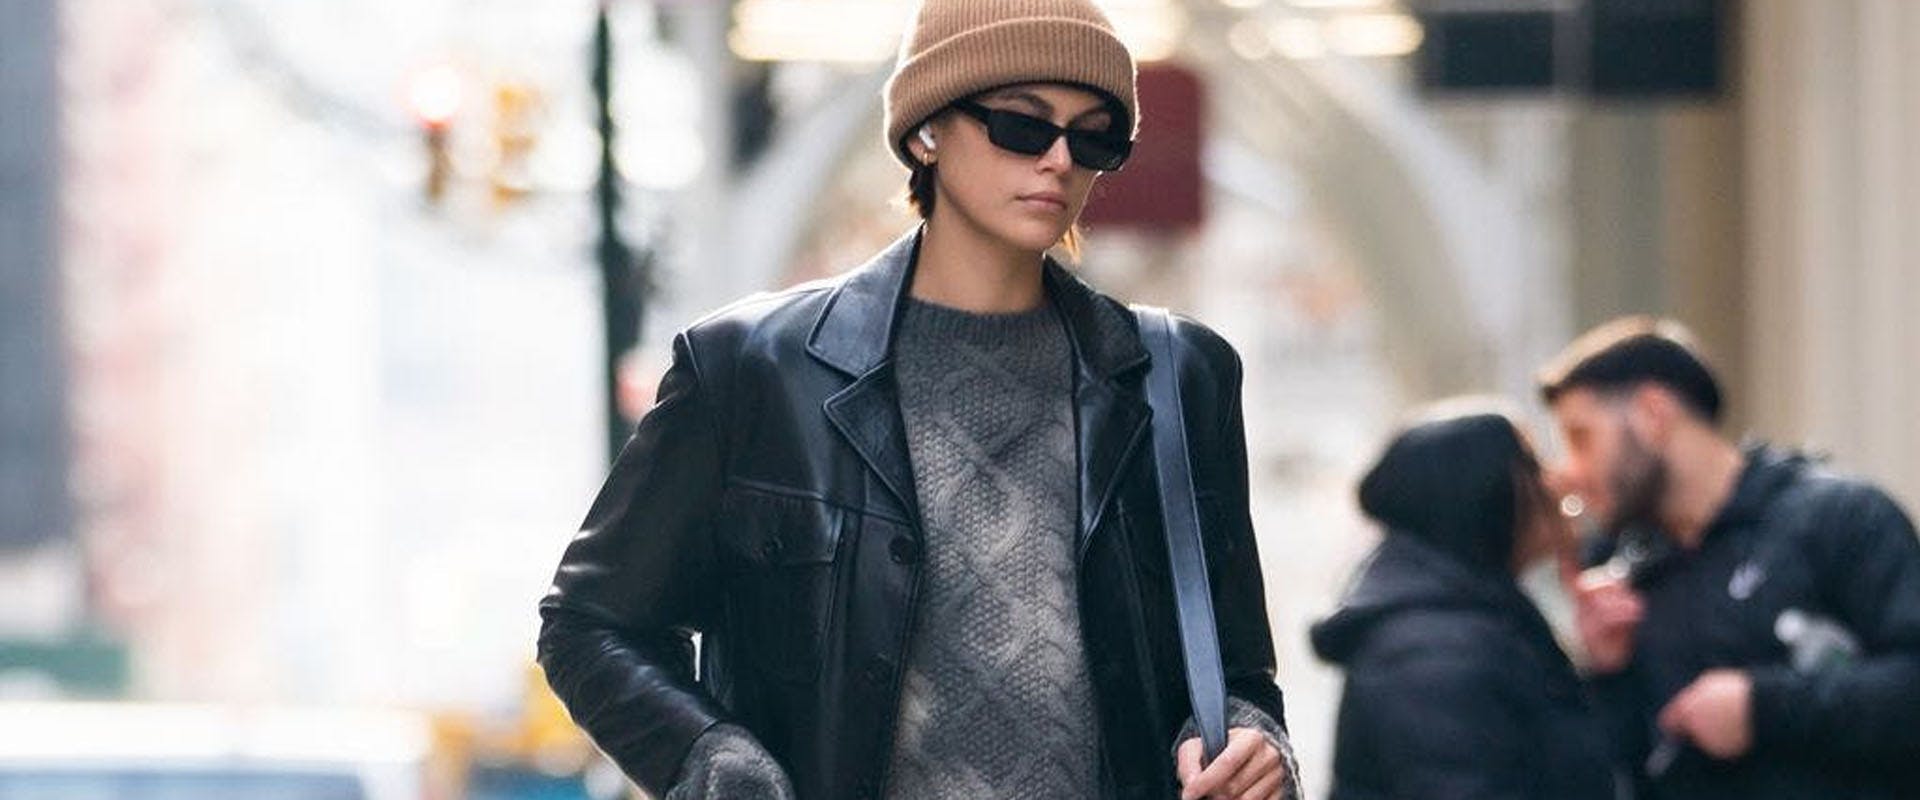 clothing apparel person human sunglasses accessories accessory coat